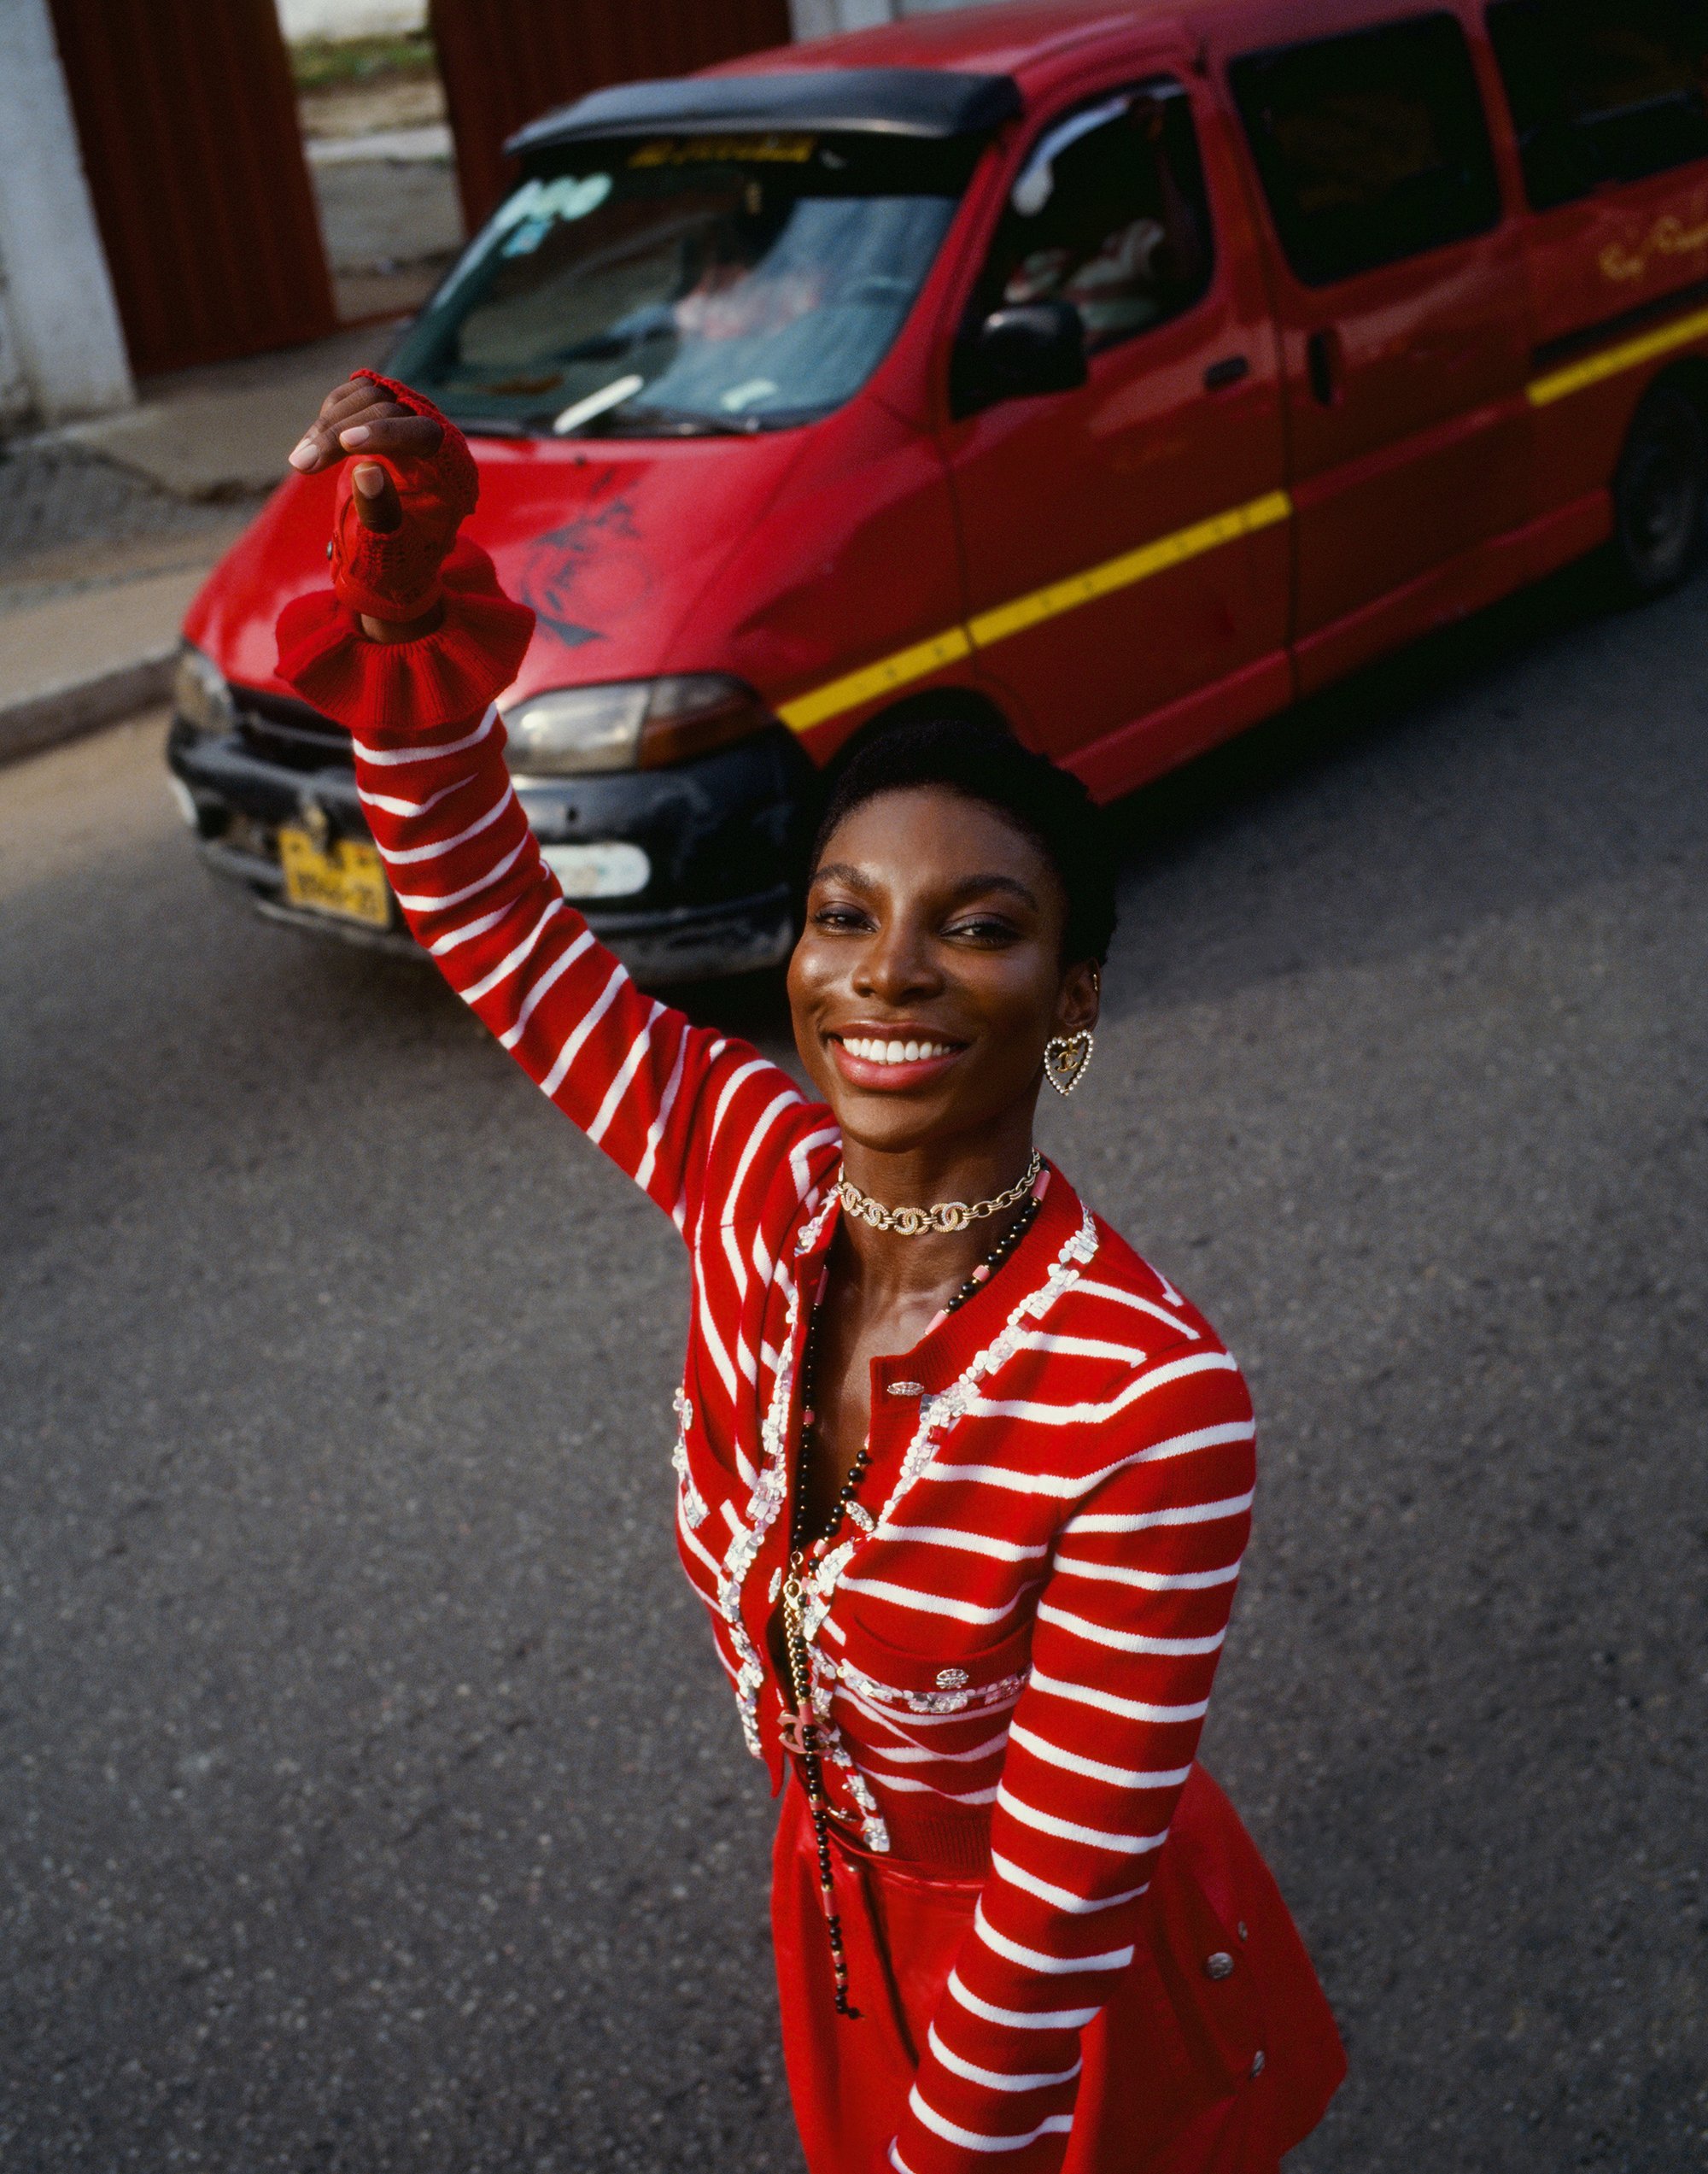 Michaela-Coel-covers-Vogue-November-Lensed-in-Ghana-by-Malick-Bodian-8.jpeg